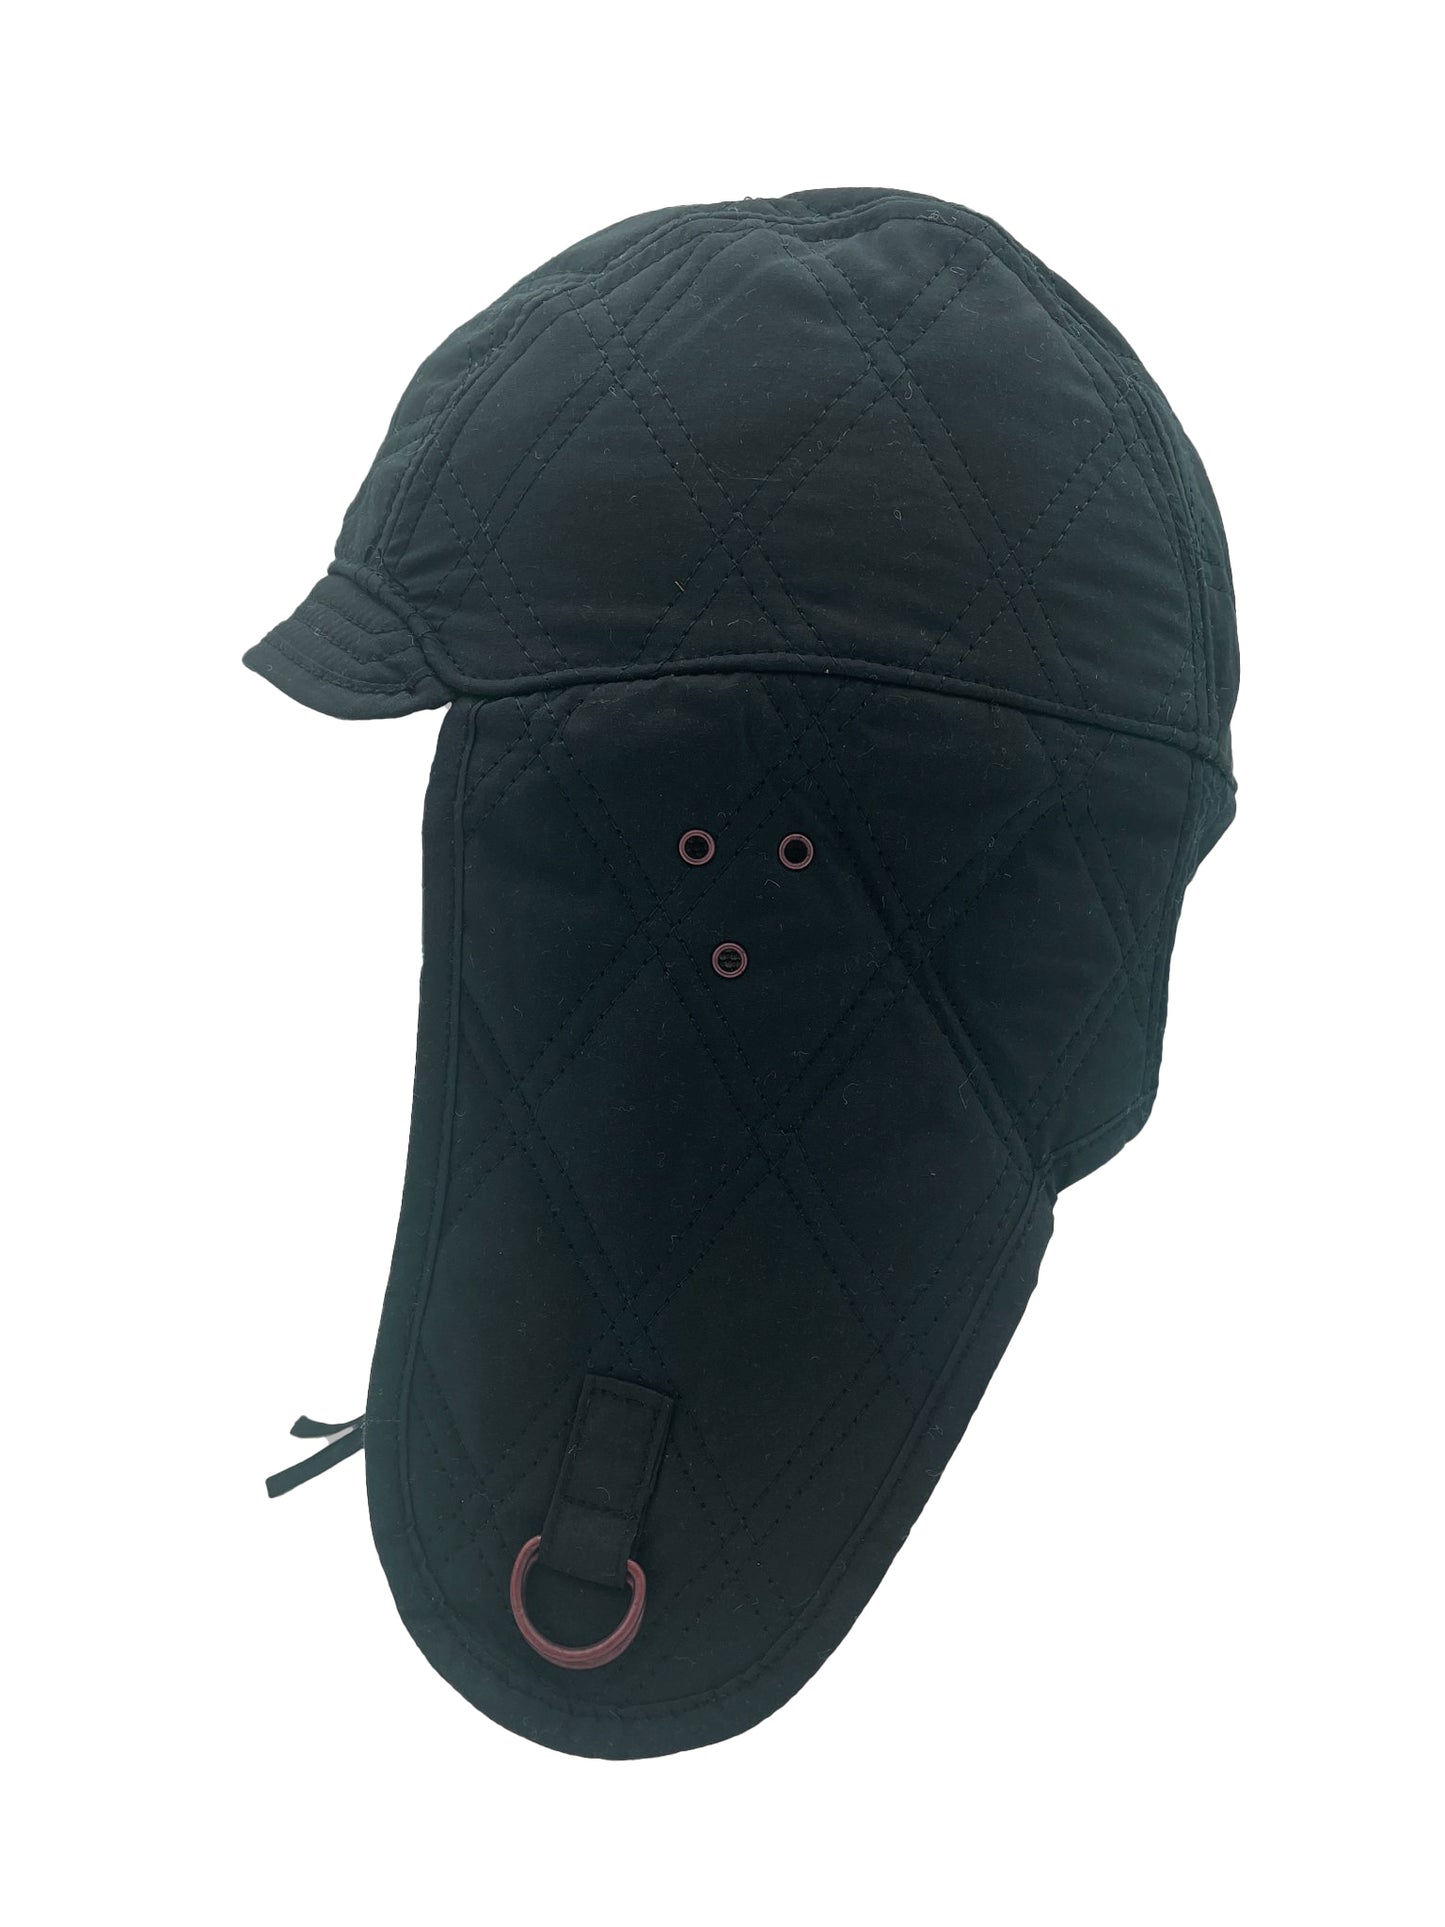 Redfern Aviator hat in black, brown or navy